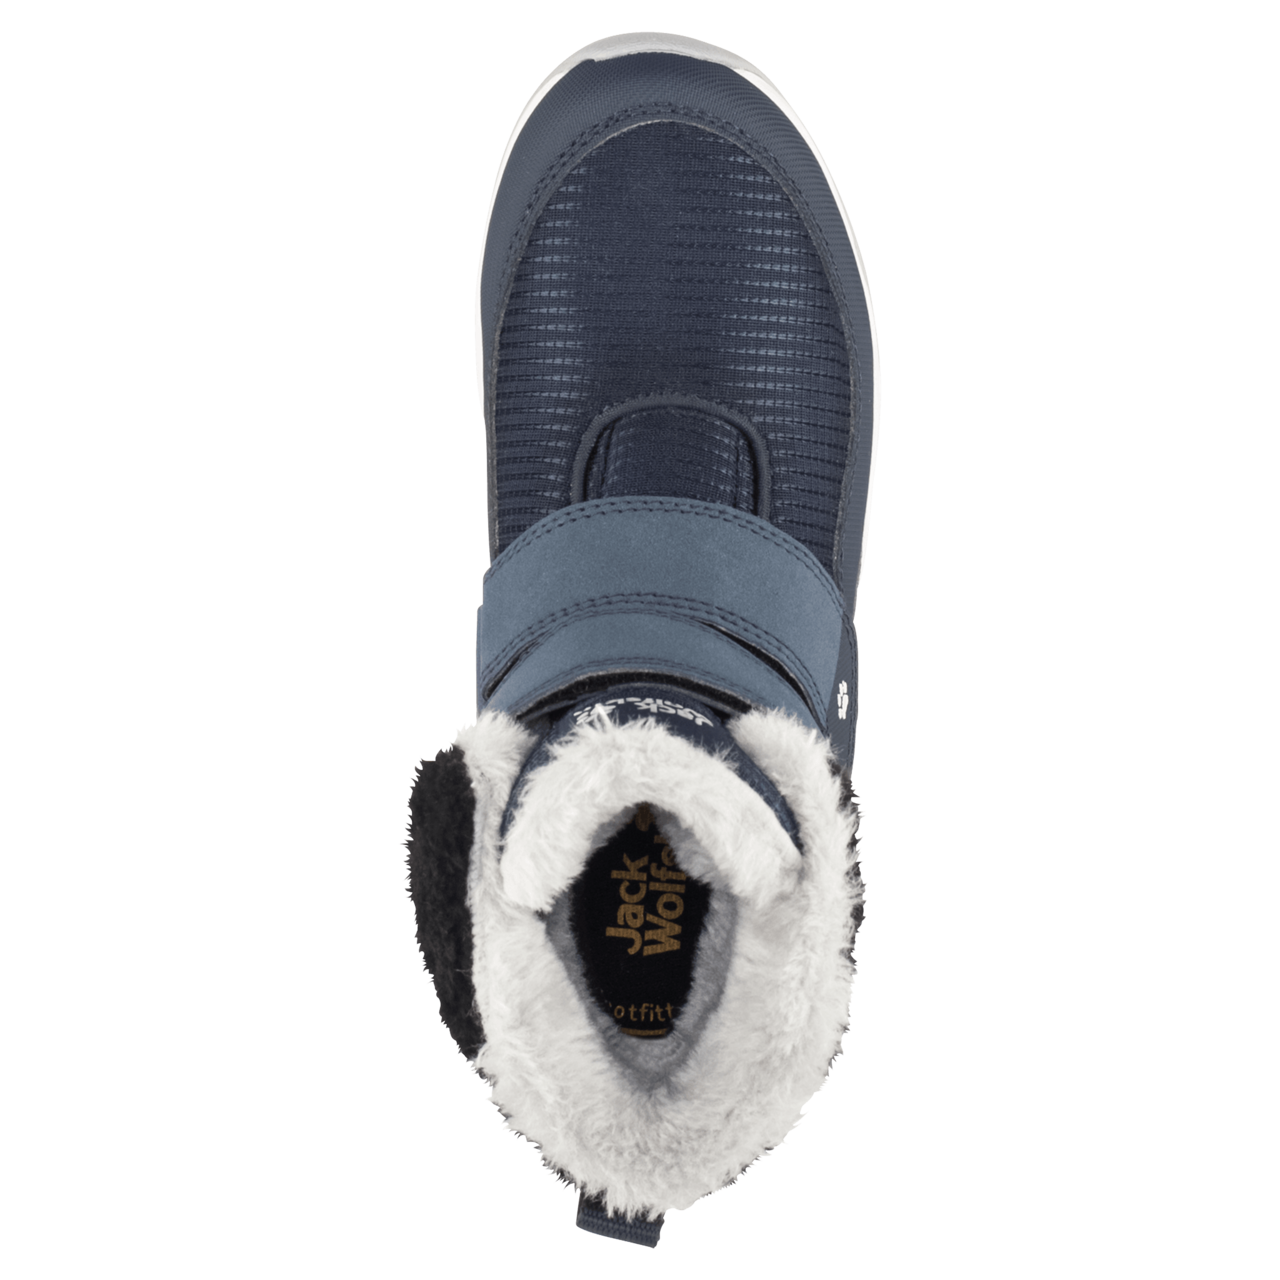 Kids' Polar Wolf Texapore Mid Vc Winter Boots | Jack Wolfskin